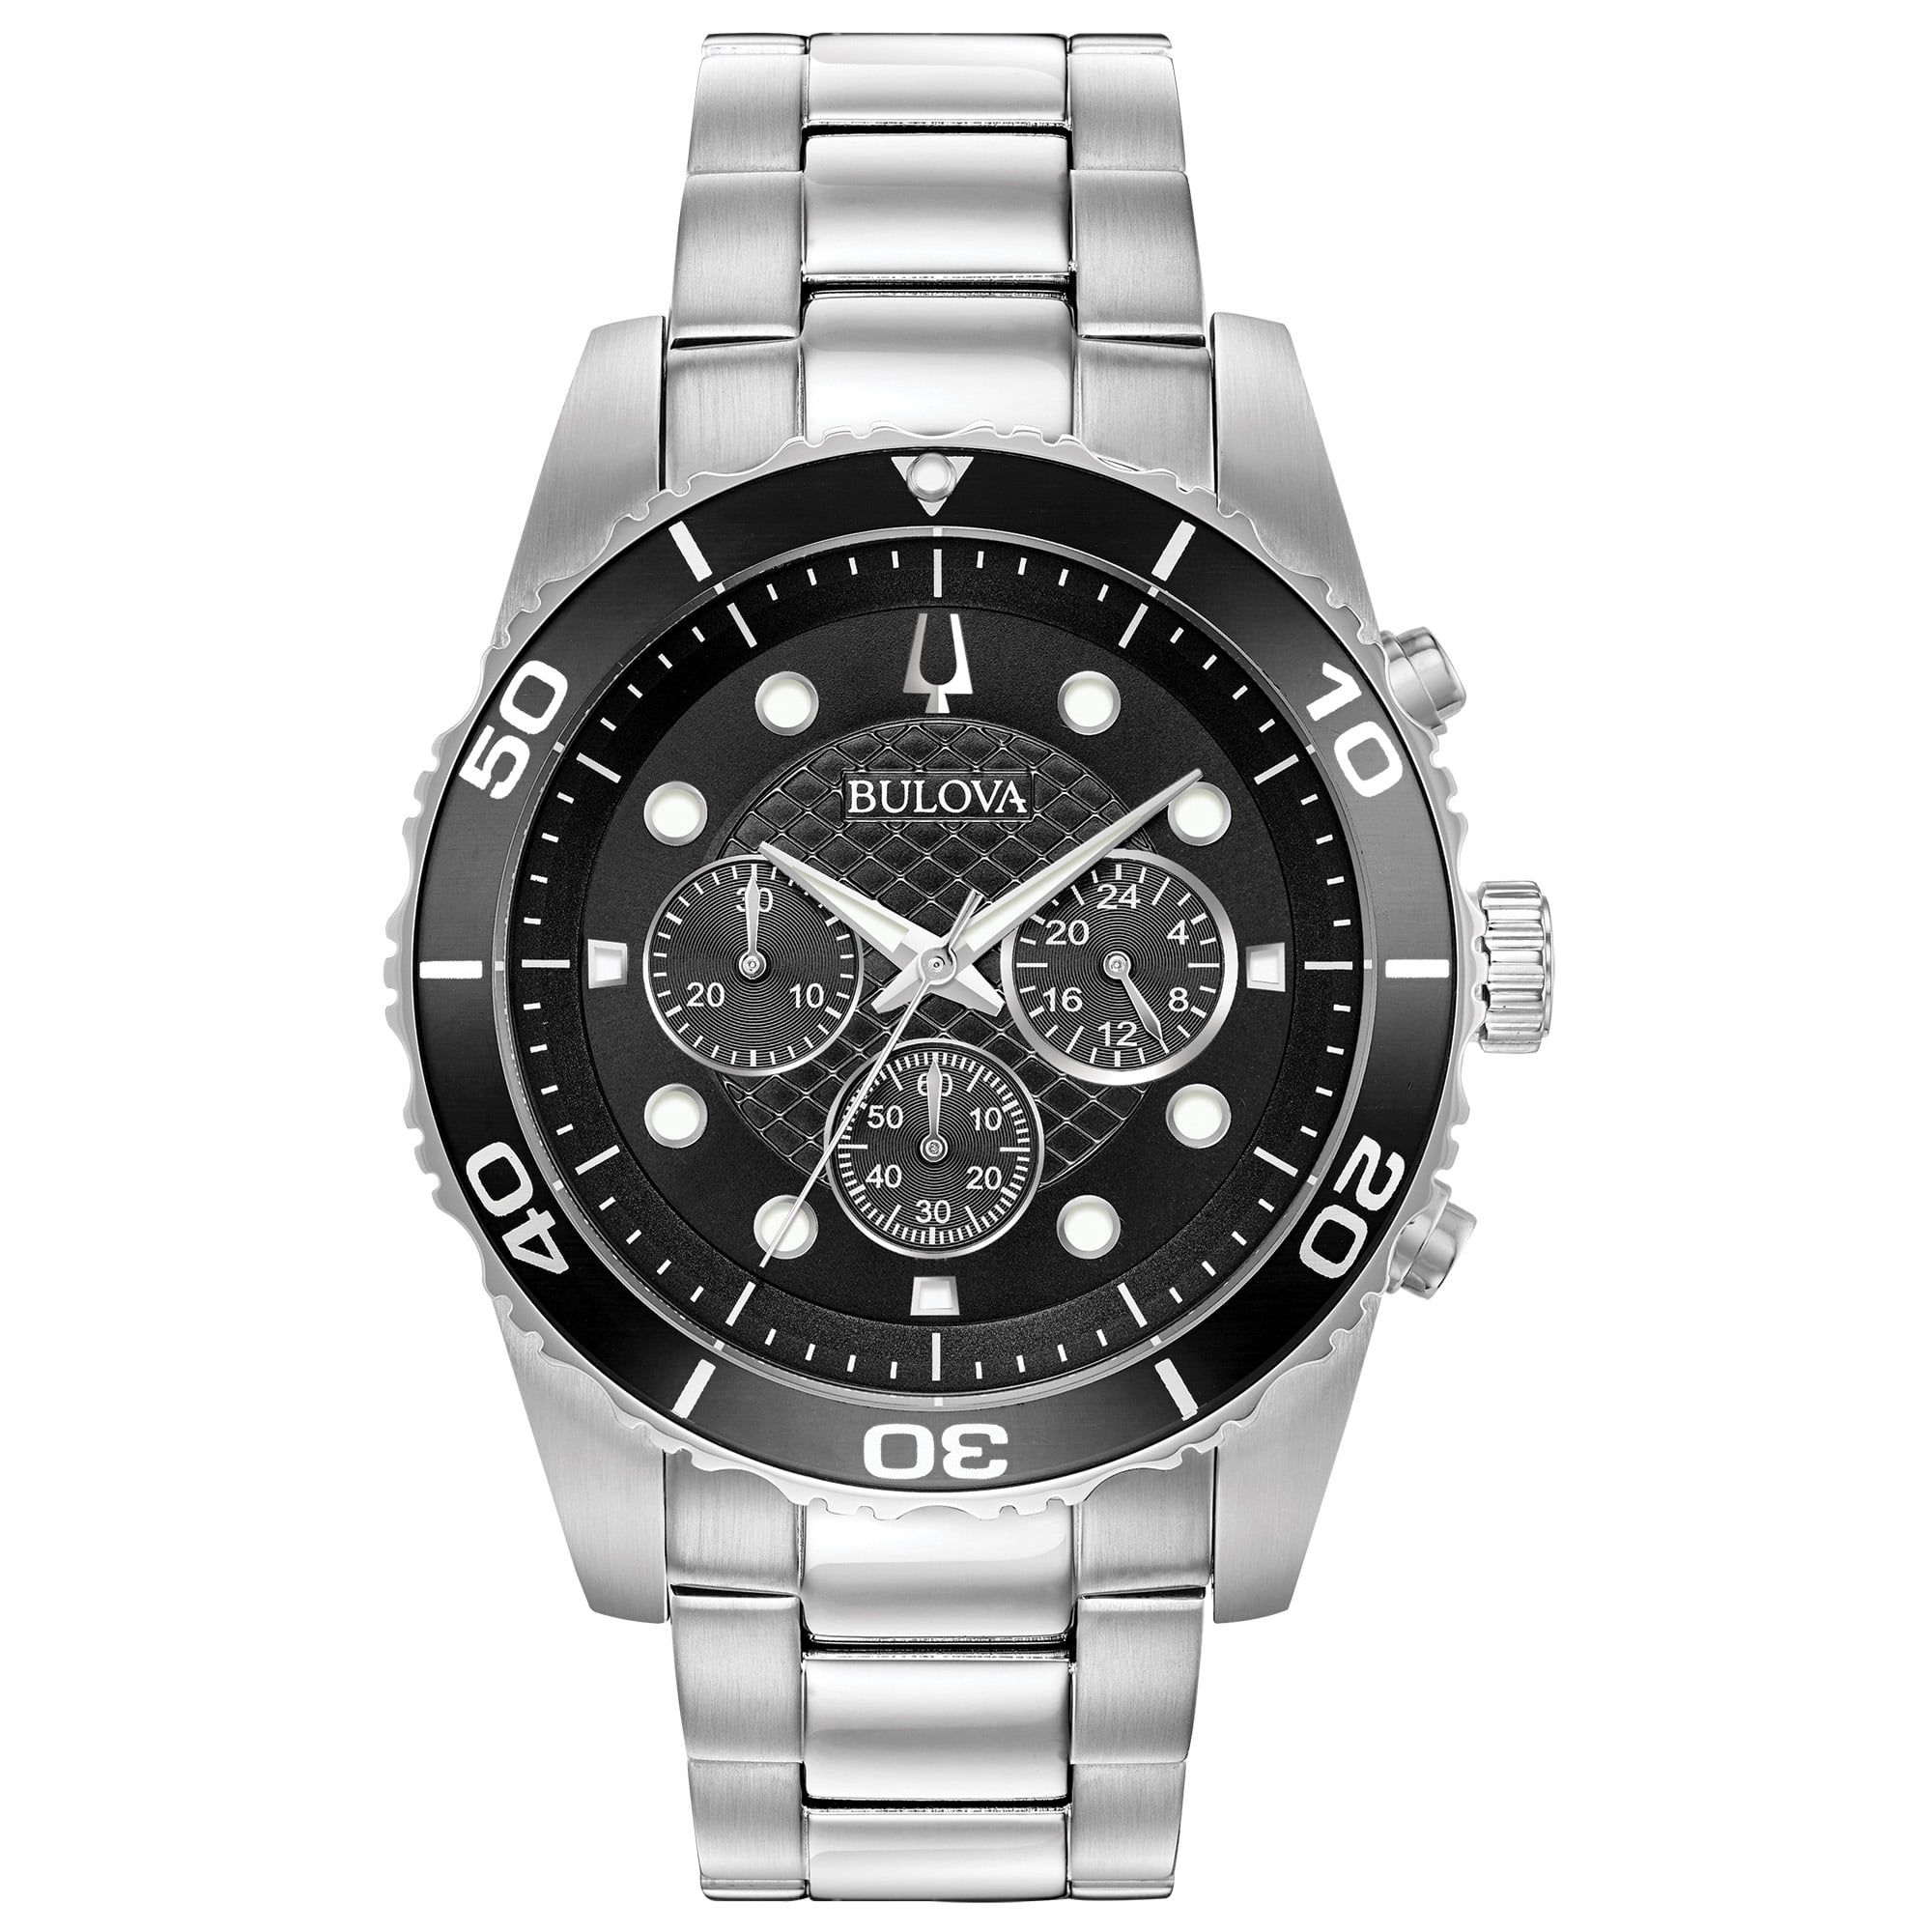 Bulova Men's Chronograph Sport Watch with Stainless Steel Bracelet - 98A210 | Walmart (US)